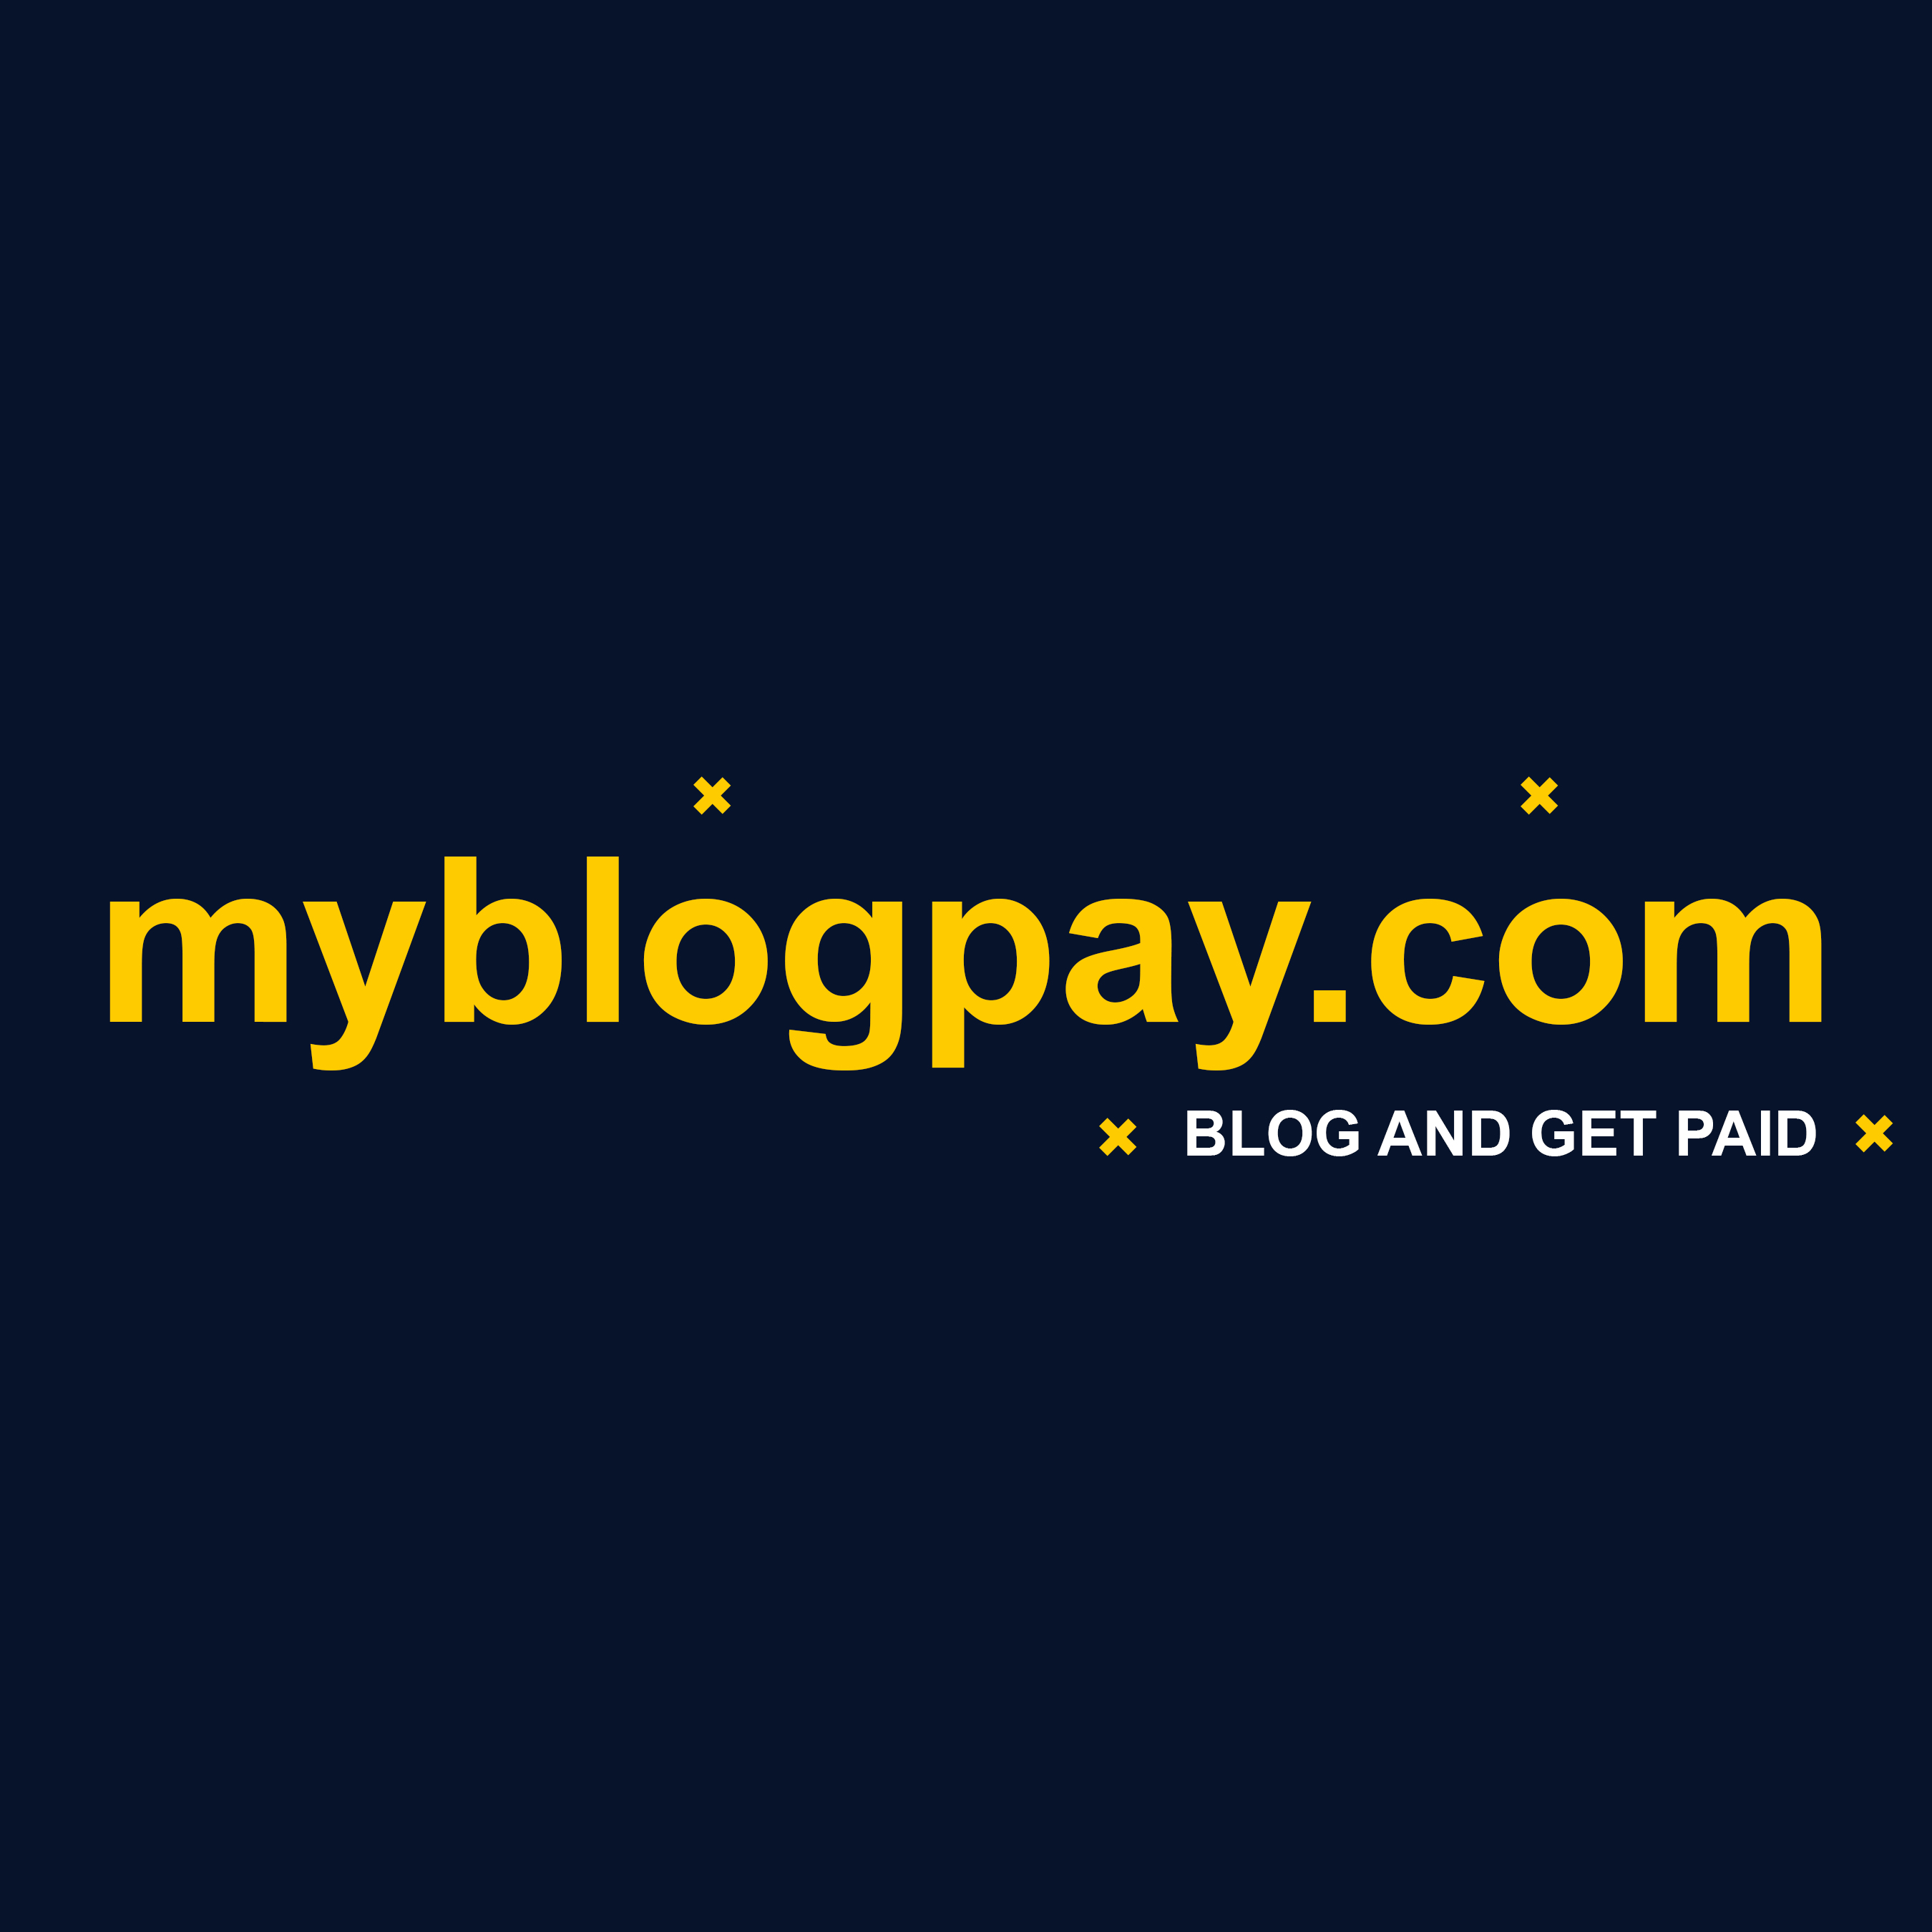 Blogpay logo